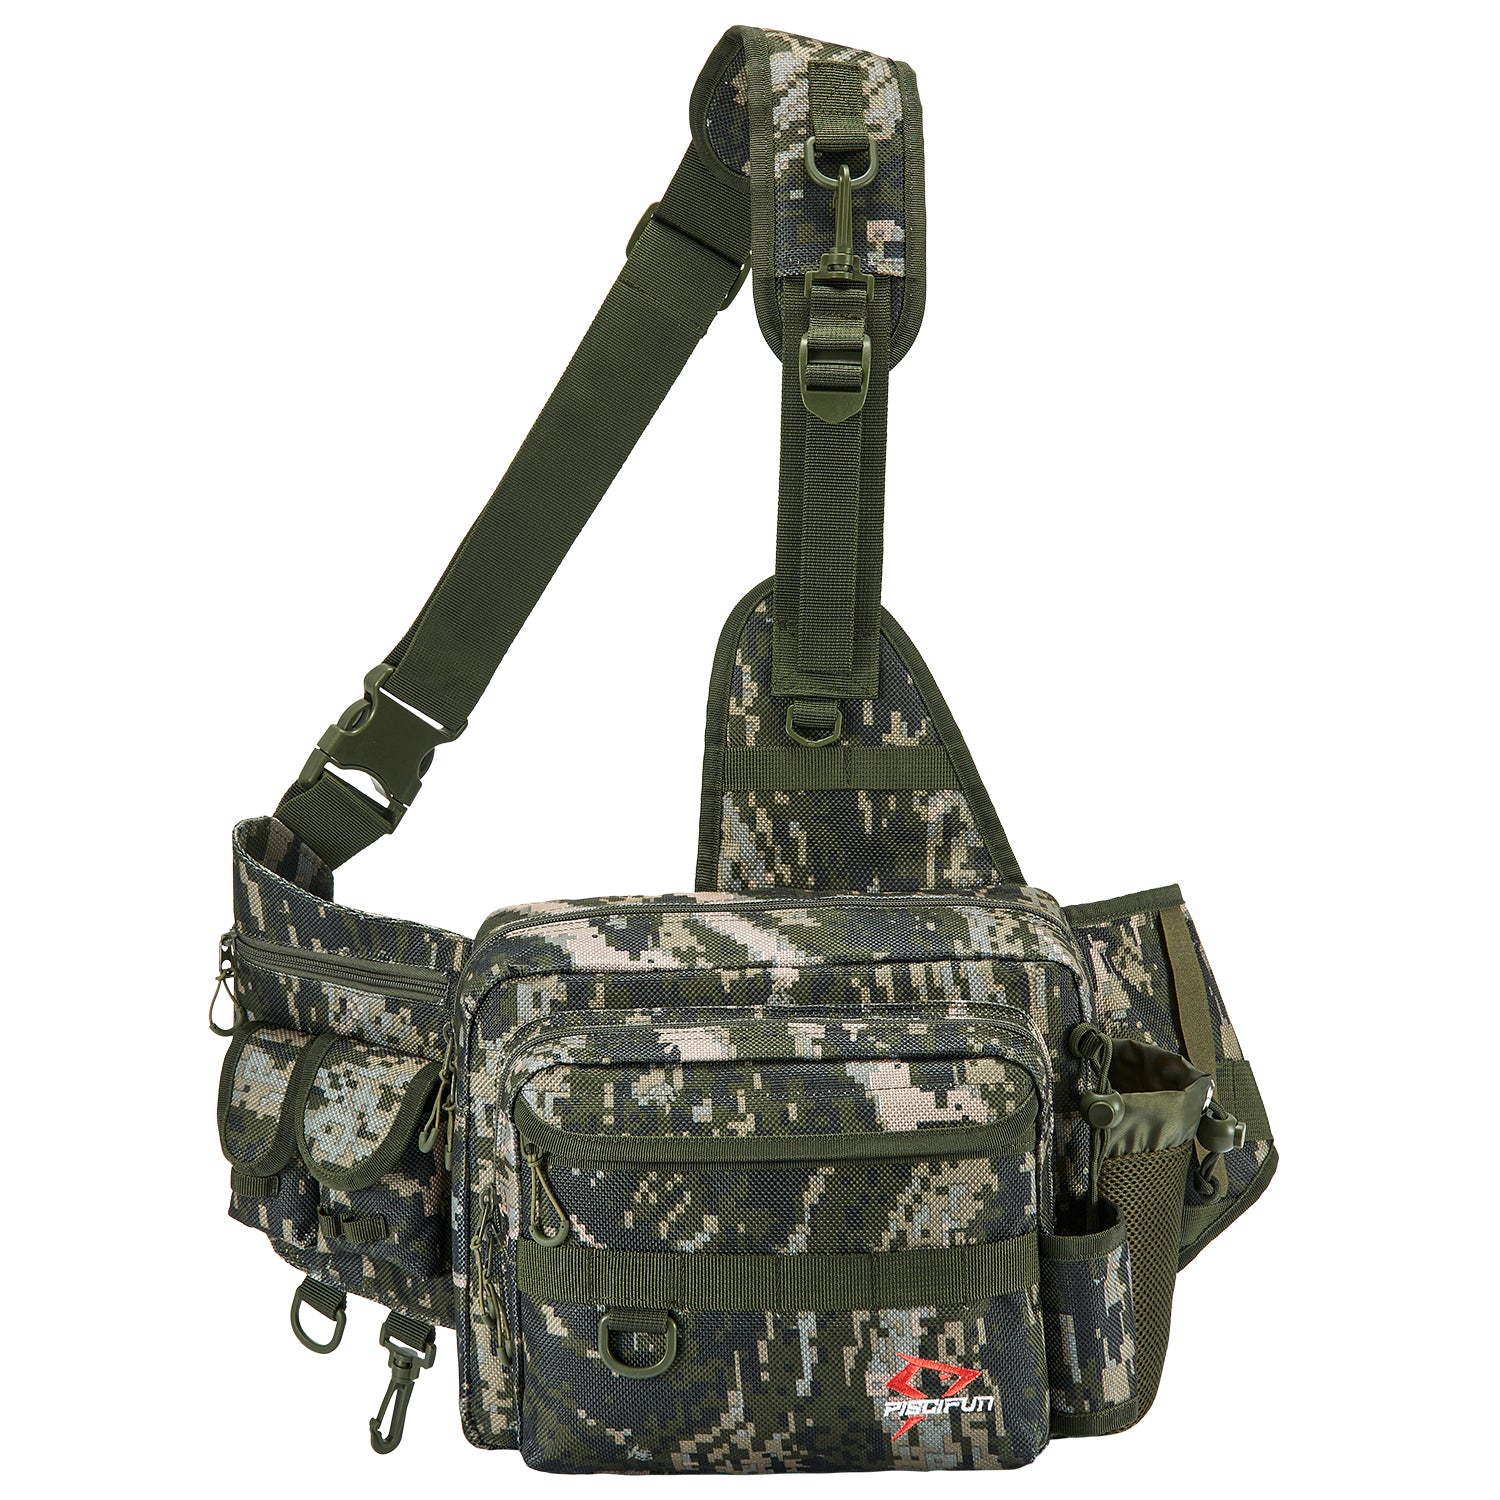 Tactical Fishing Tackle Bag Sling Storage Pack Cross Body Sling Bag Waist  Strap